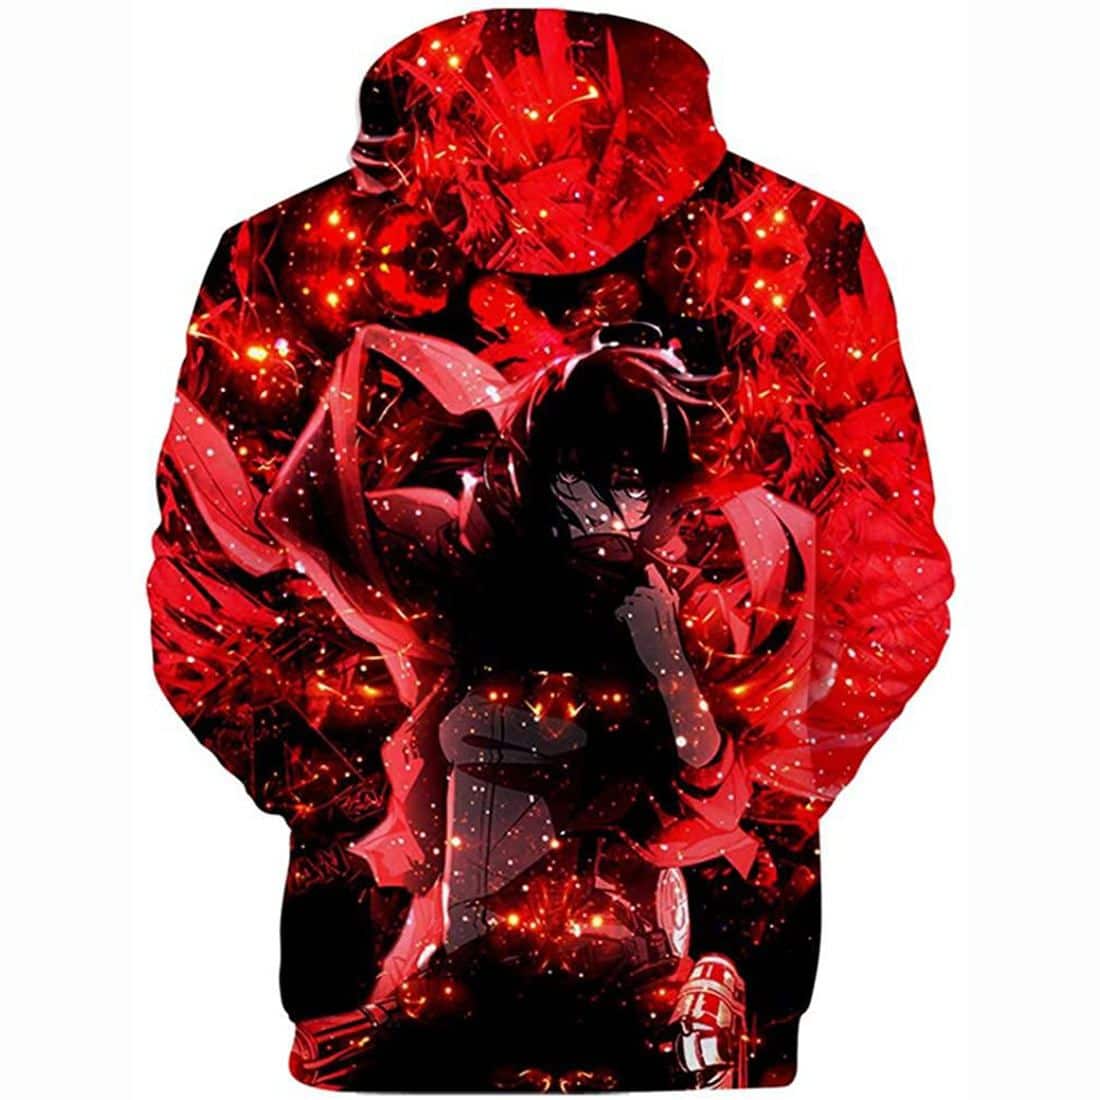 Anime Attack On Titan 3D Printed Unisex Hoodie Pullover Eren Mikasa Ackerman Cosplay Sweatshirt